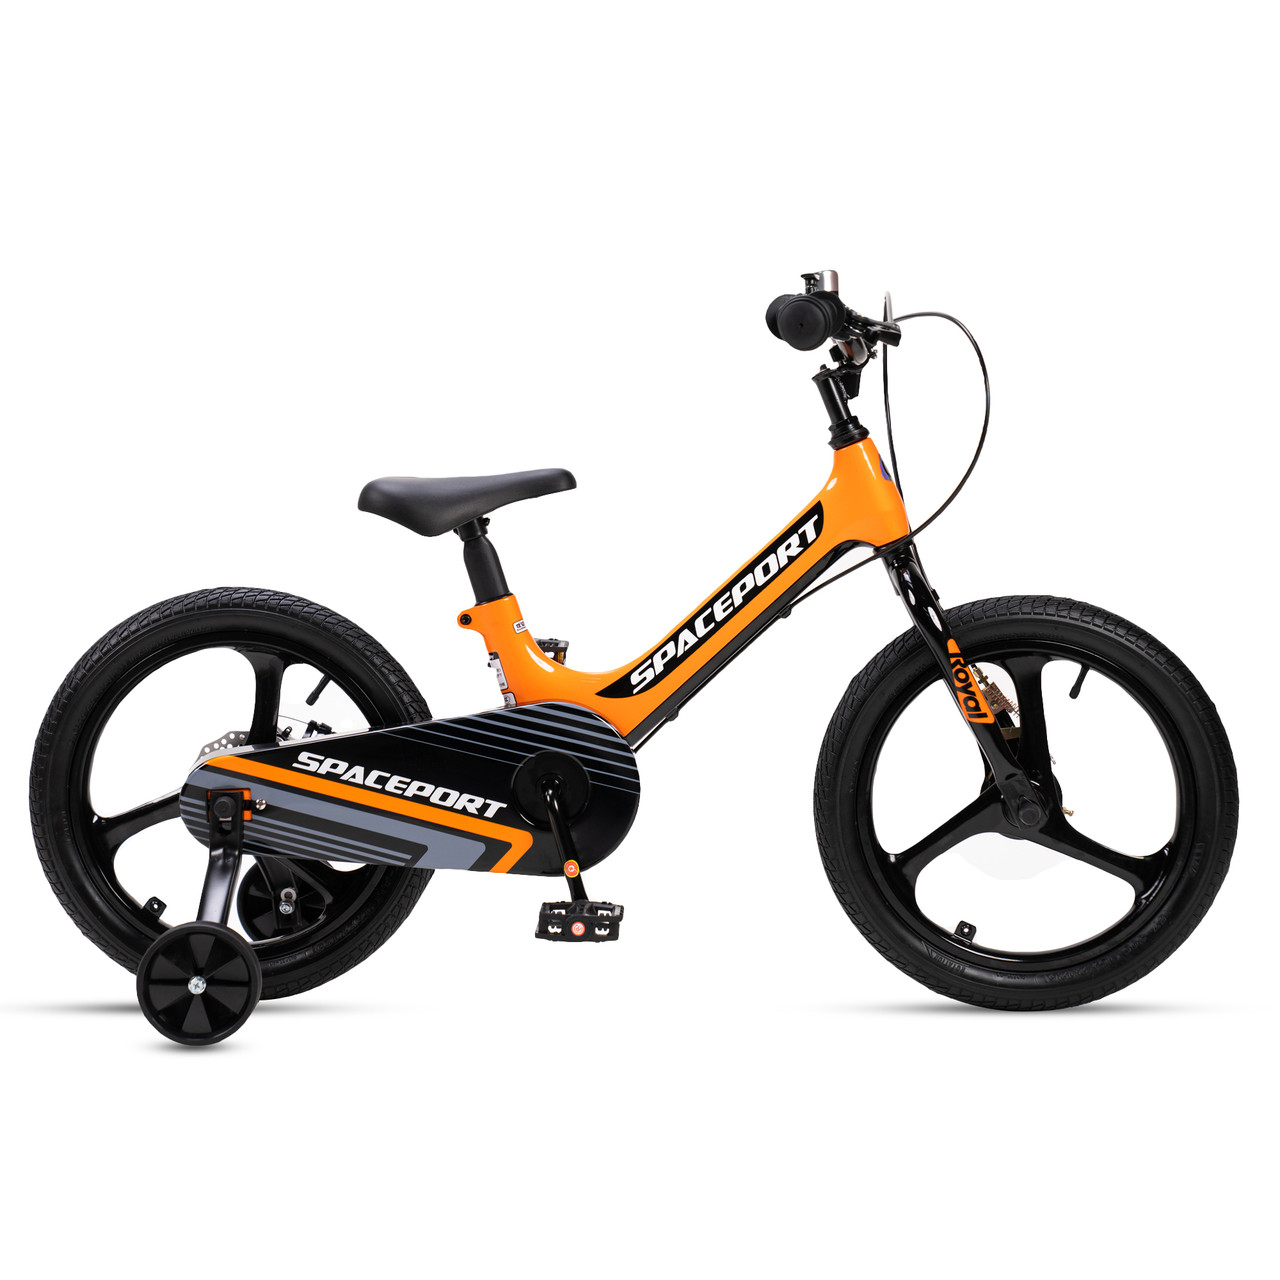 Дитячий велосипед RoyalBaby Space Port 18" помаранчевий, Помаранчевий